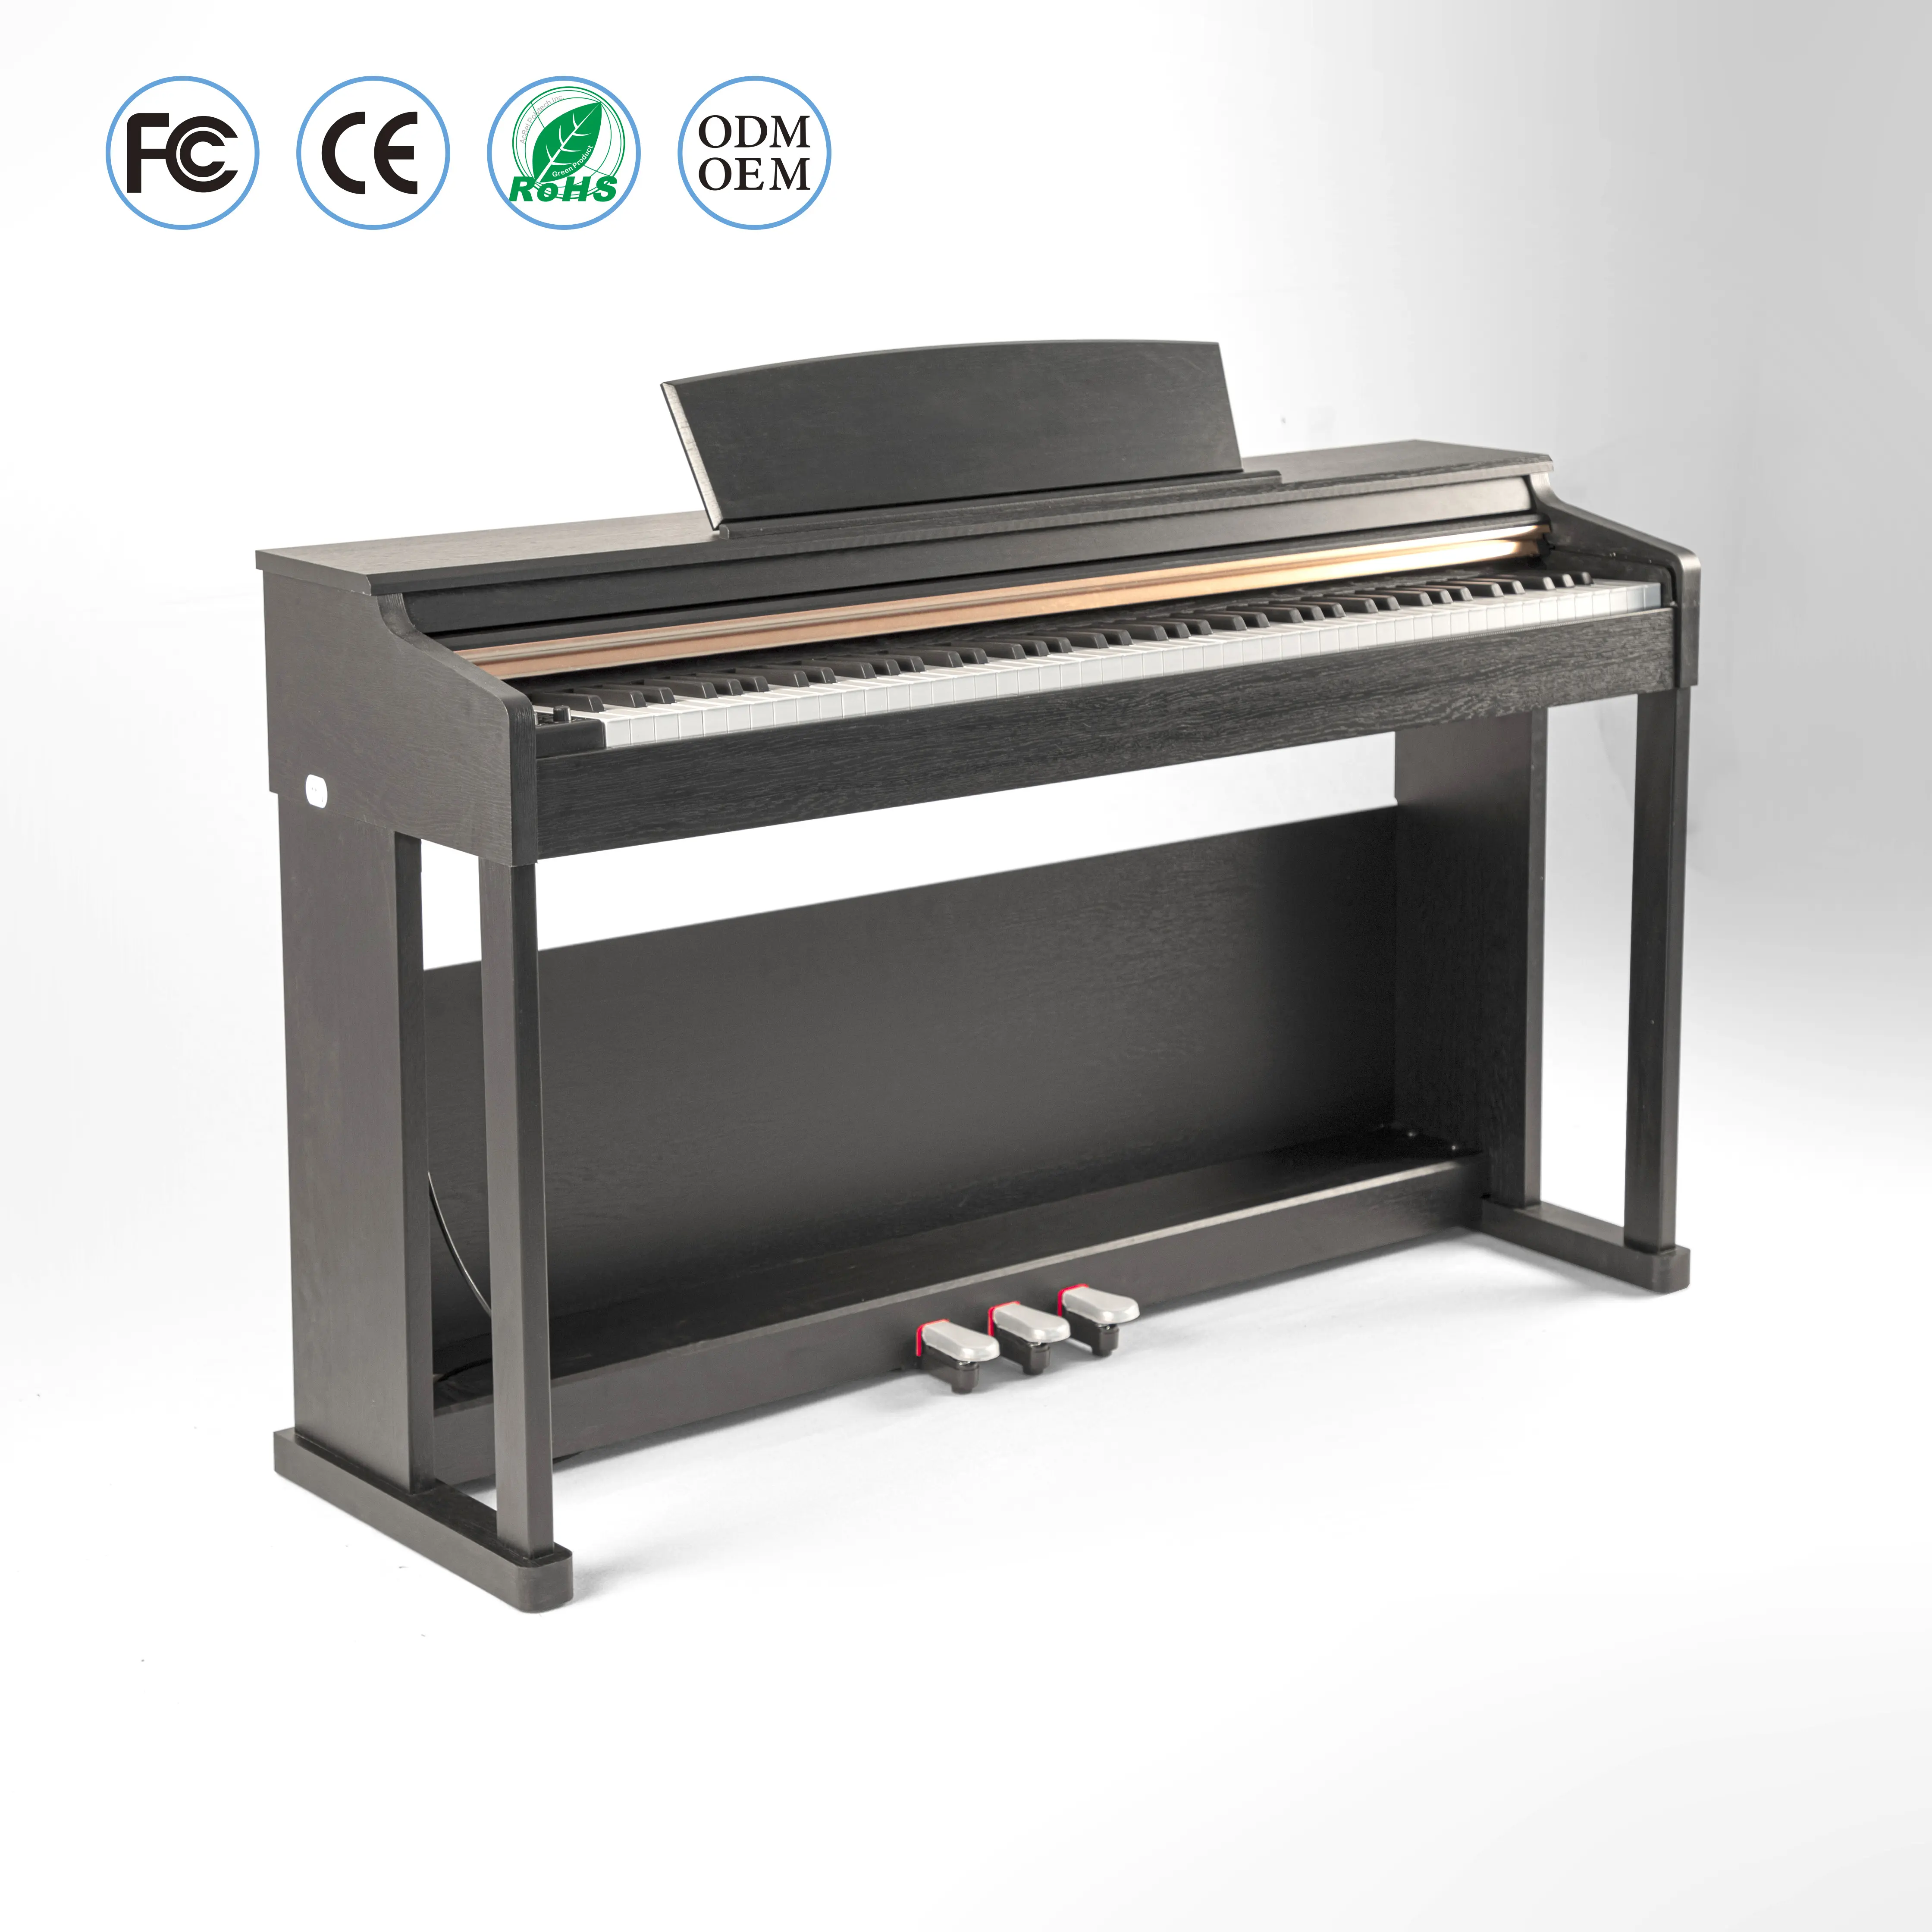 Hxs 88 कुंजी भारित डिजिटल पियानो रोलैंड कीबोर्ड पियानो इलेक्ट्रिक पियानो अन्य संगीत वाद्ययंत्र और सहायक उपकरण